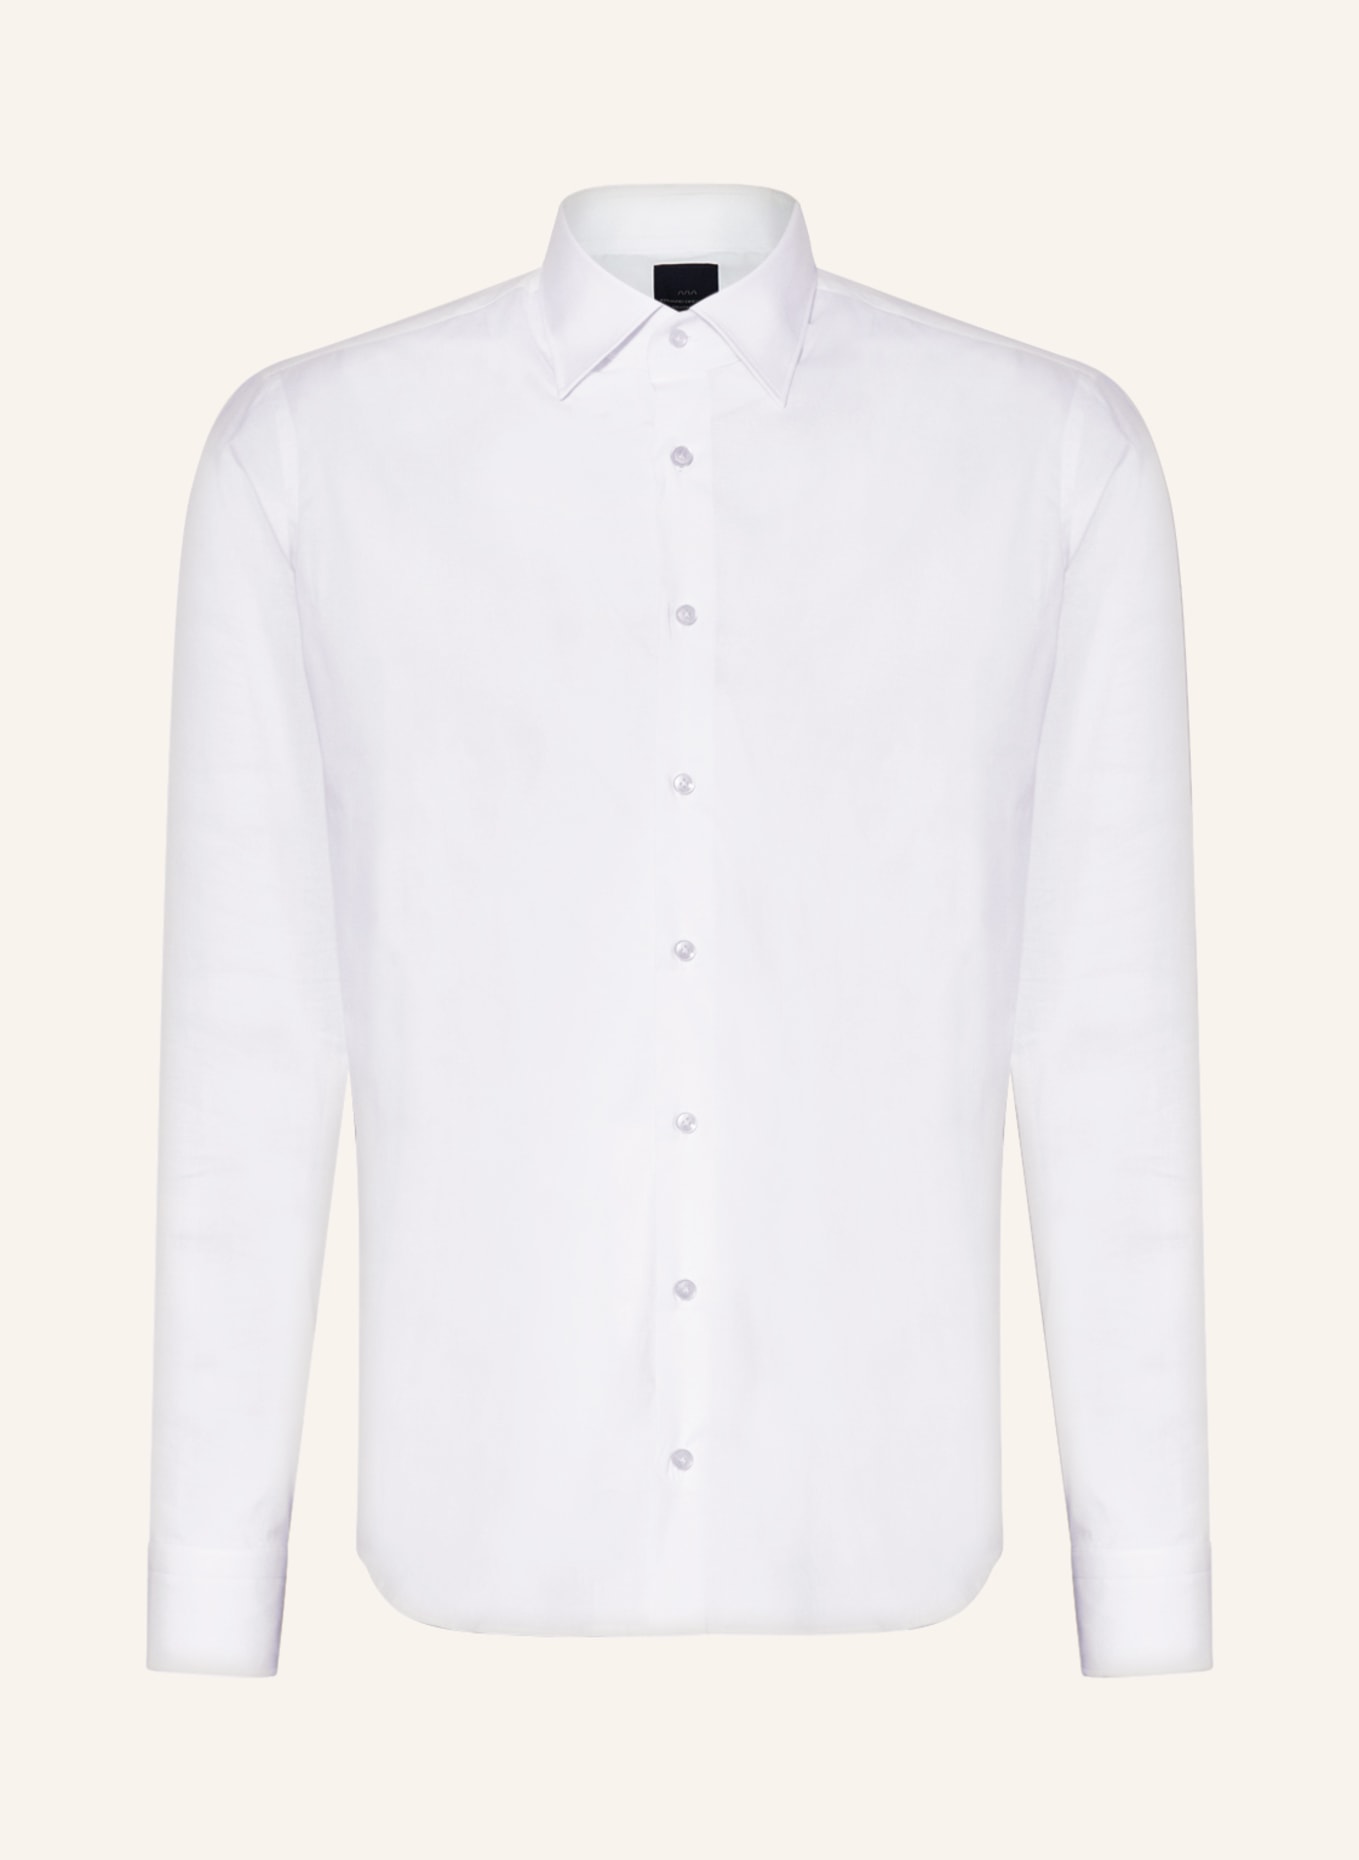 EDUARD DRESSLER Hemd Shaped Fit, Farbe: WEISS (Bild 1)